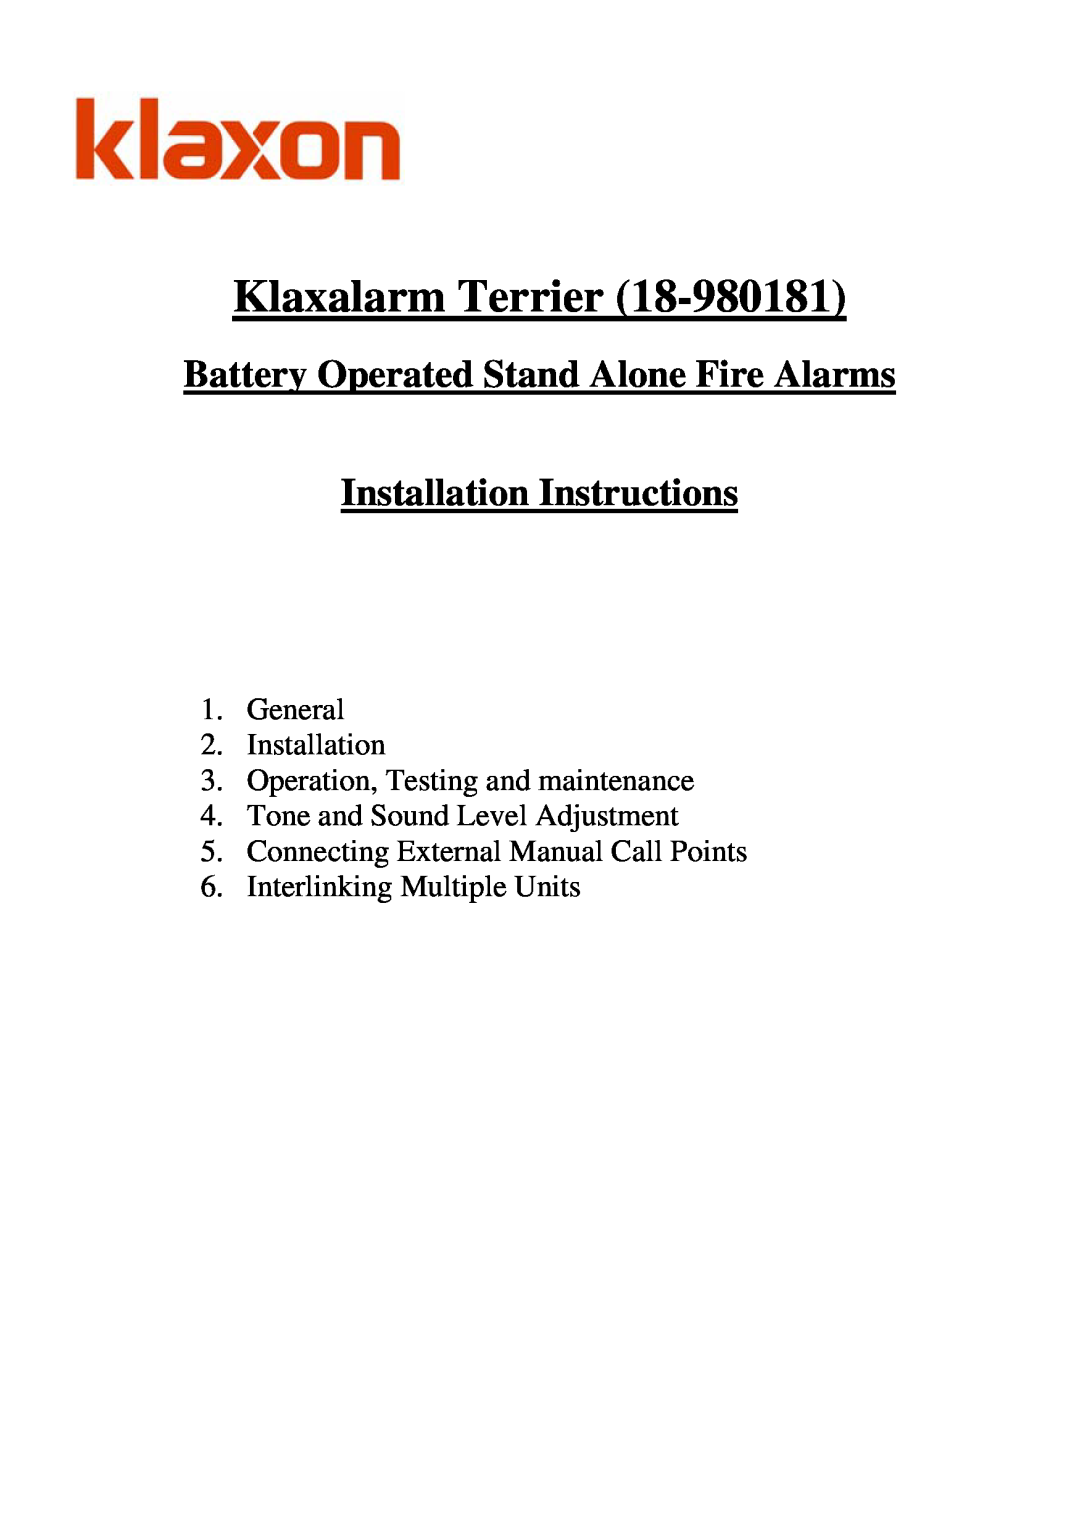 Klaxon 18-980181 installation instructions General 2. Installation 3. Operation, Testing and maintenance 